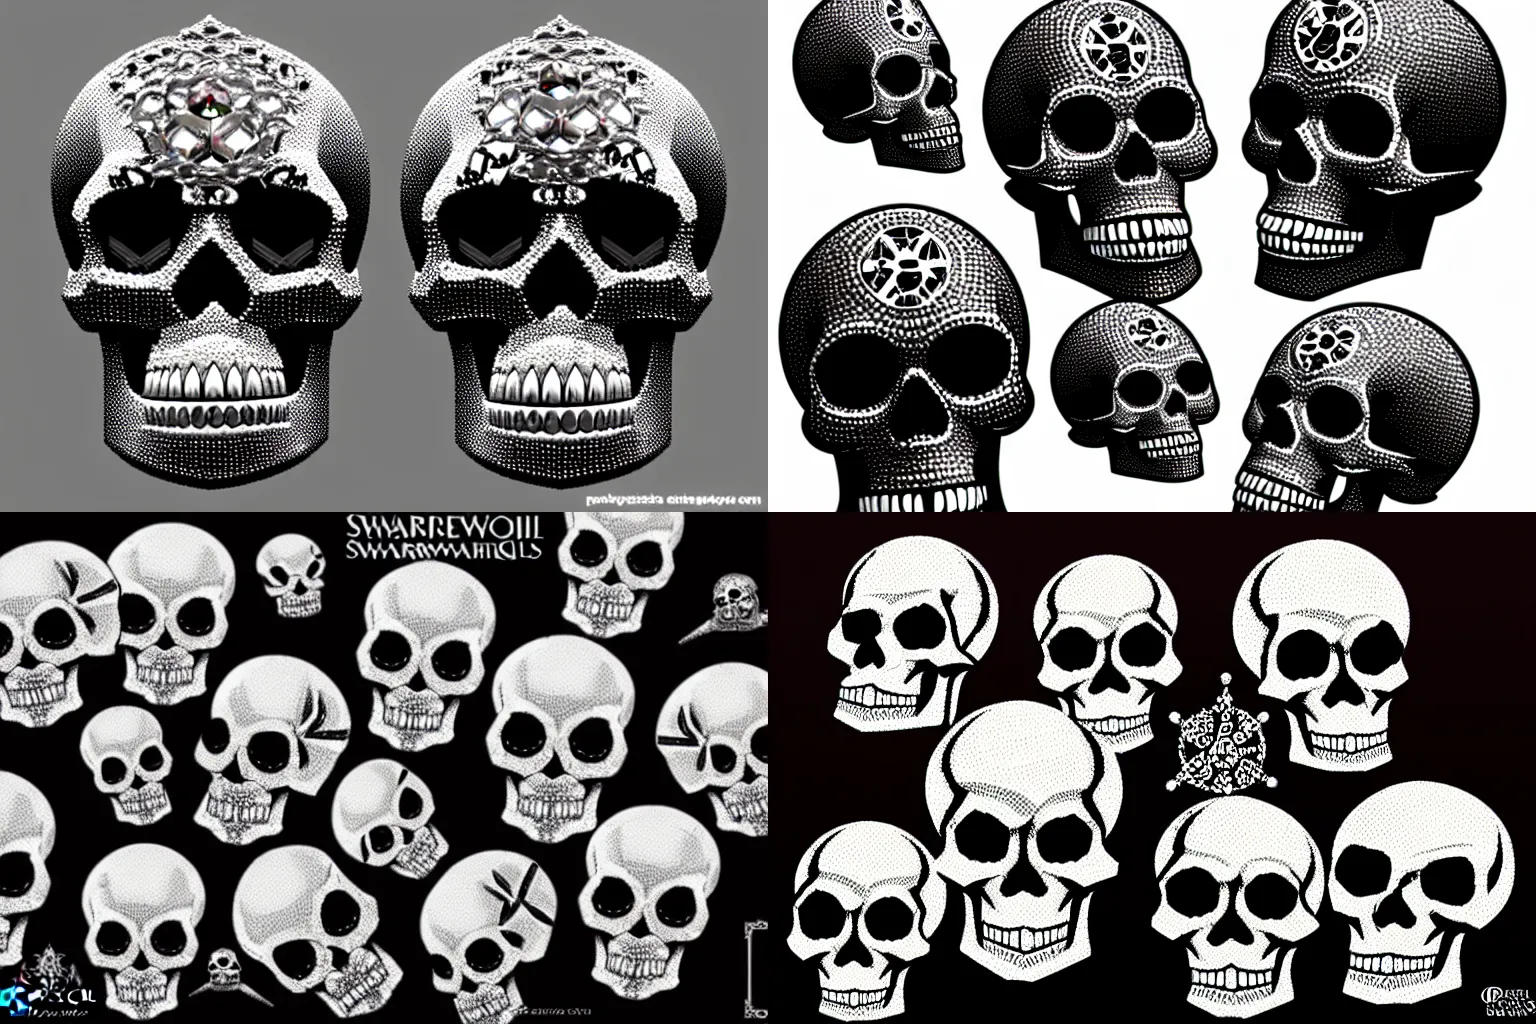 Prompt: elaborate swarovski skulls in dungeon setting